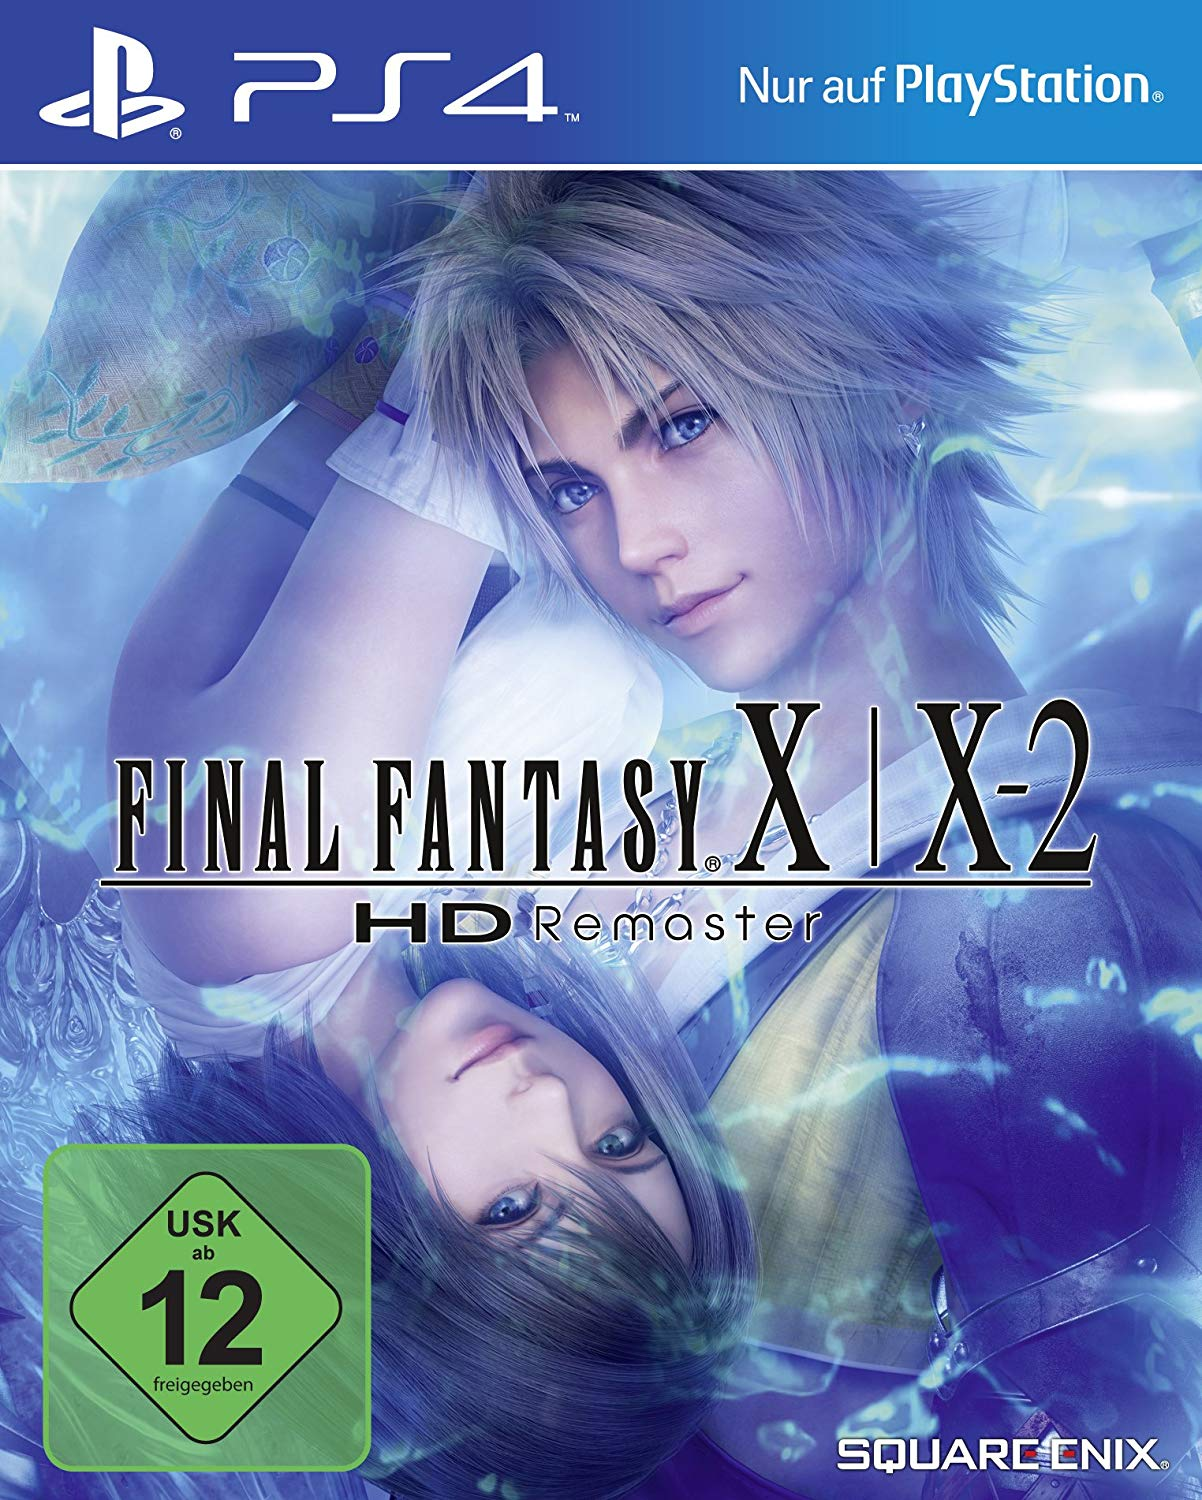 Final Fantasy X / HD [PlayStation Remaster 4] - X-2 